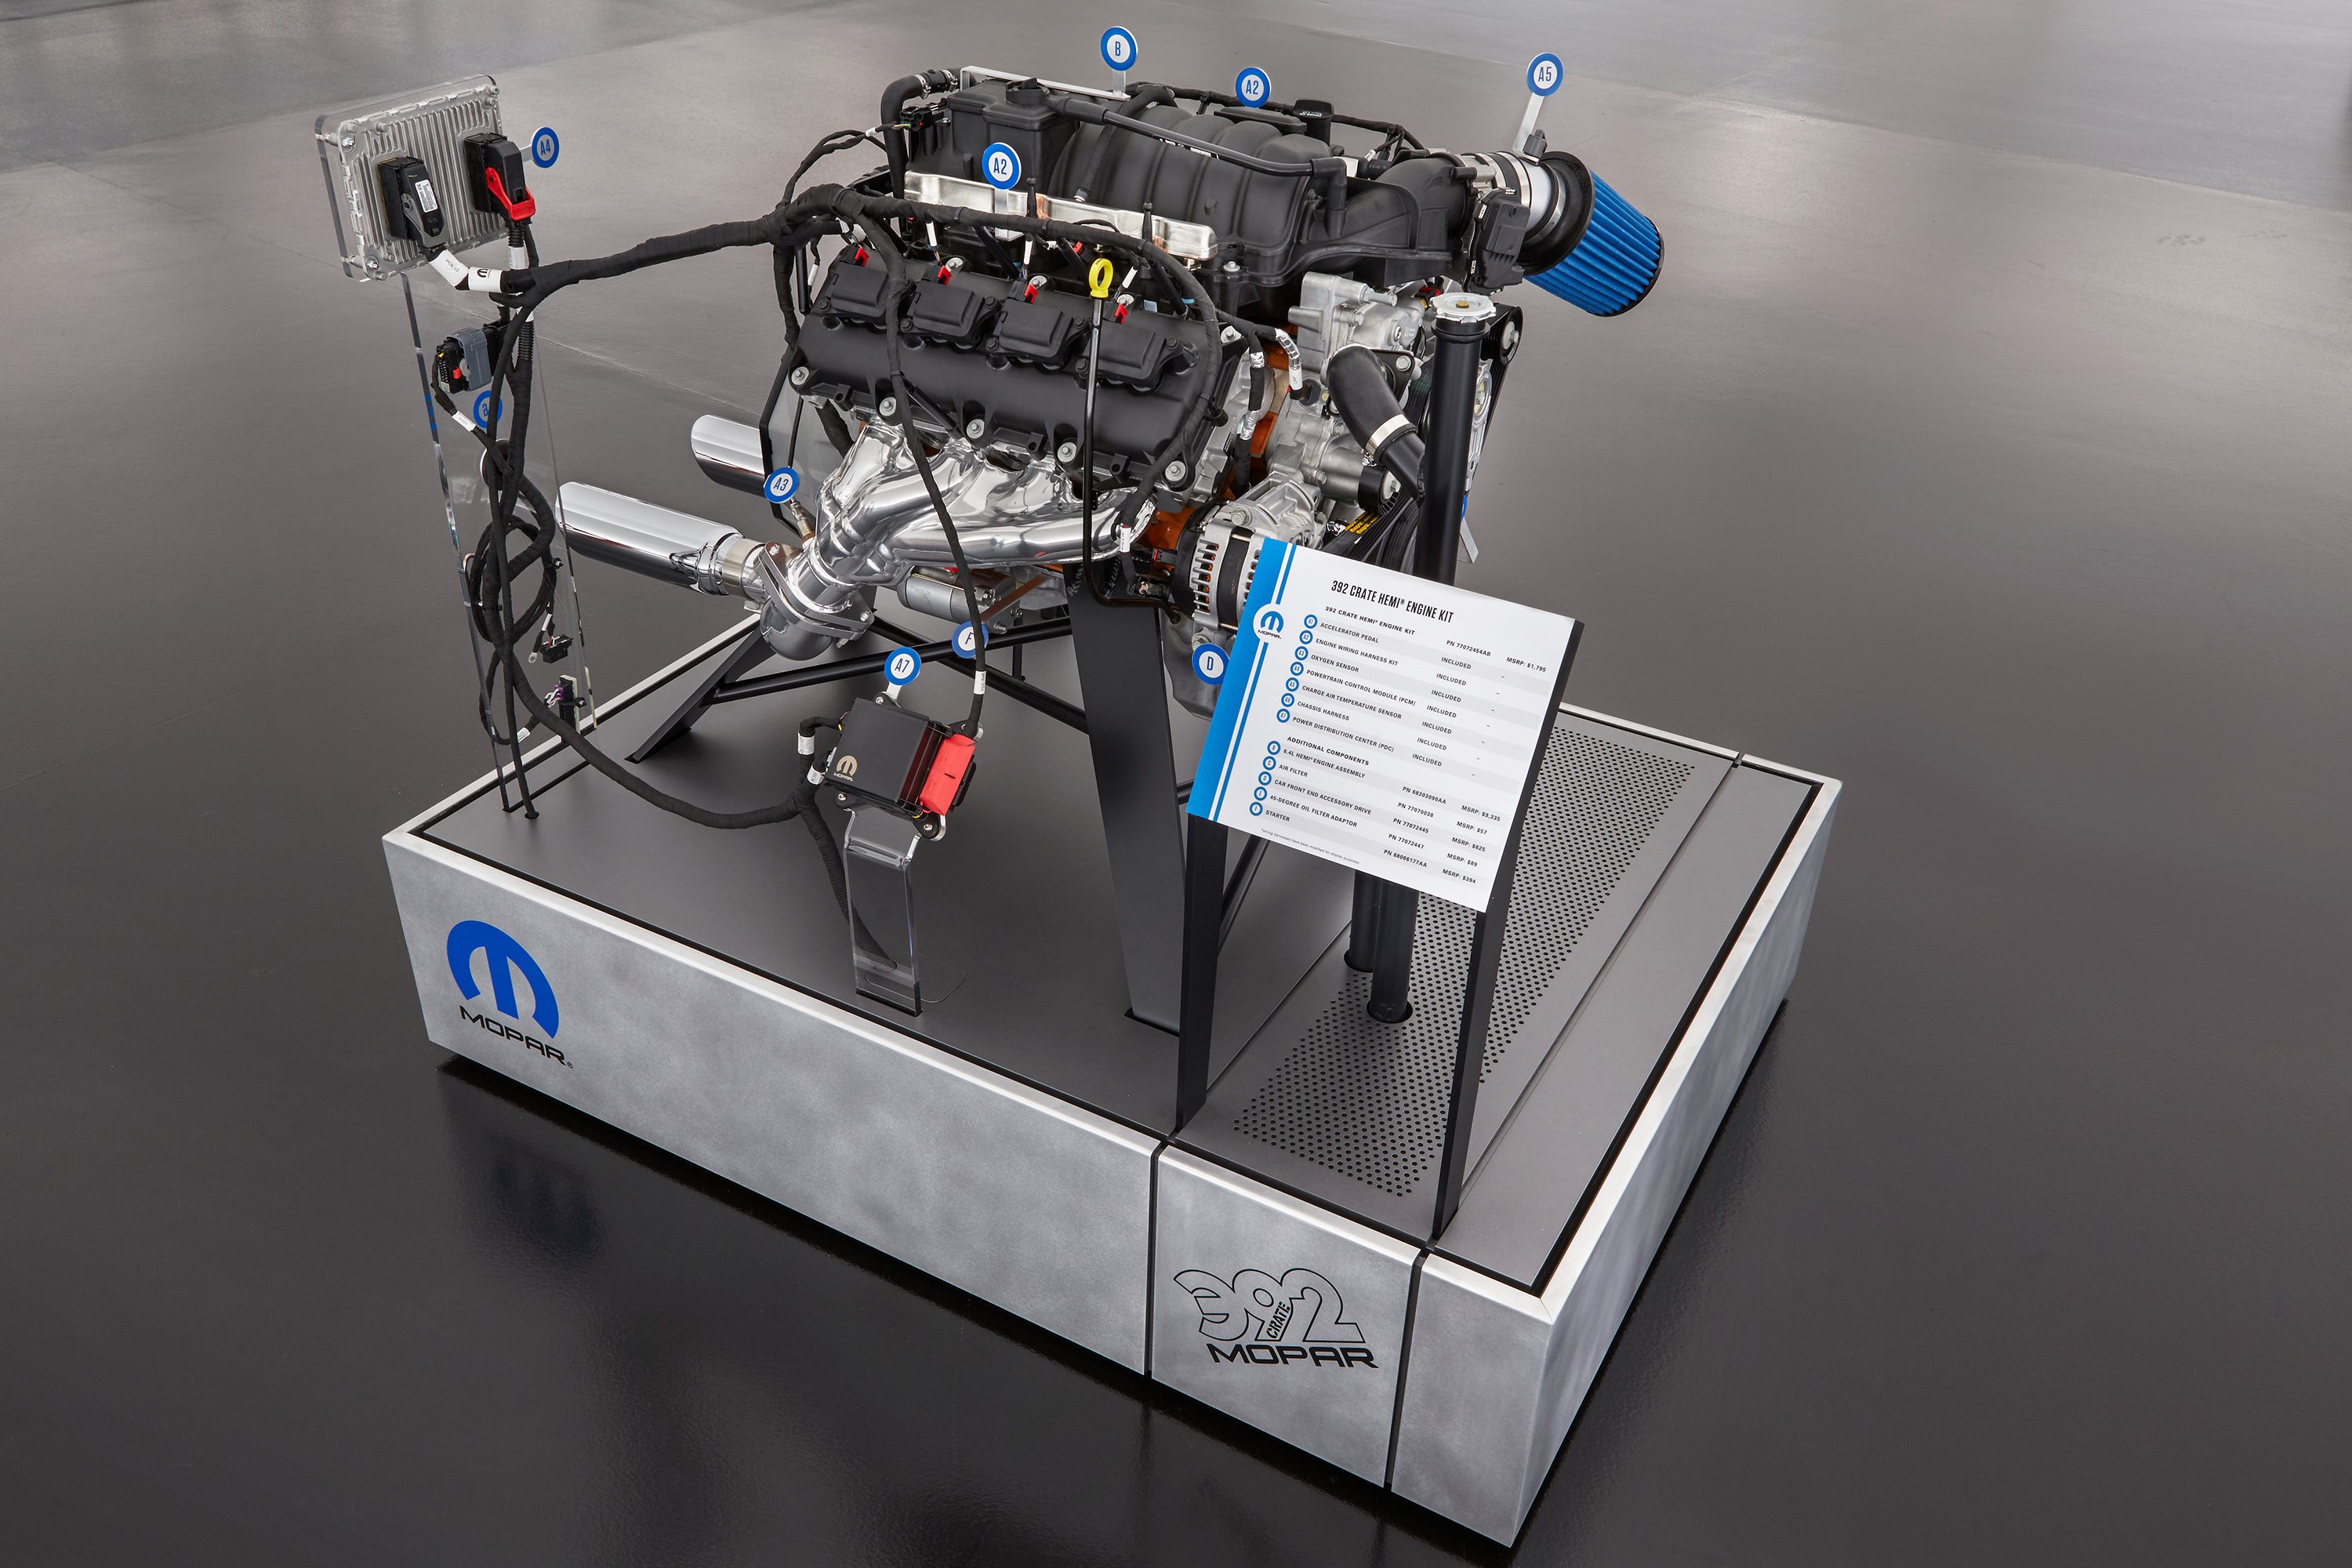 Mopar Crate HEMI Engine Kit allows retro rides to get modern power